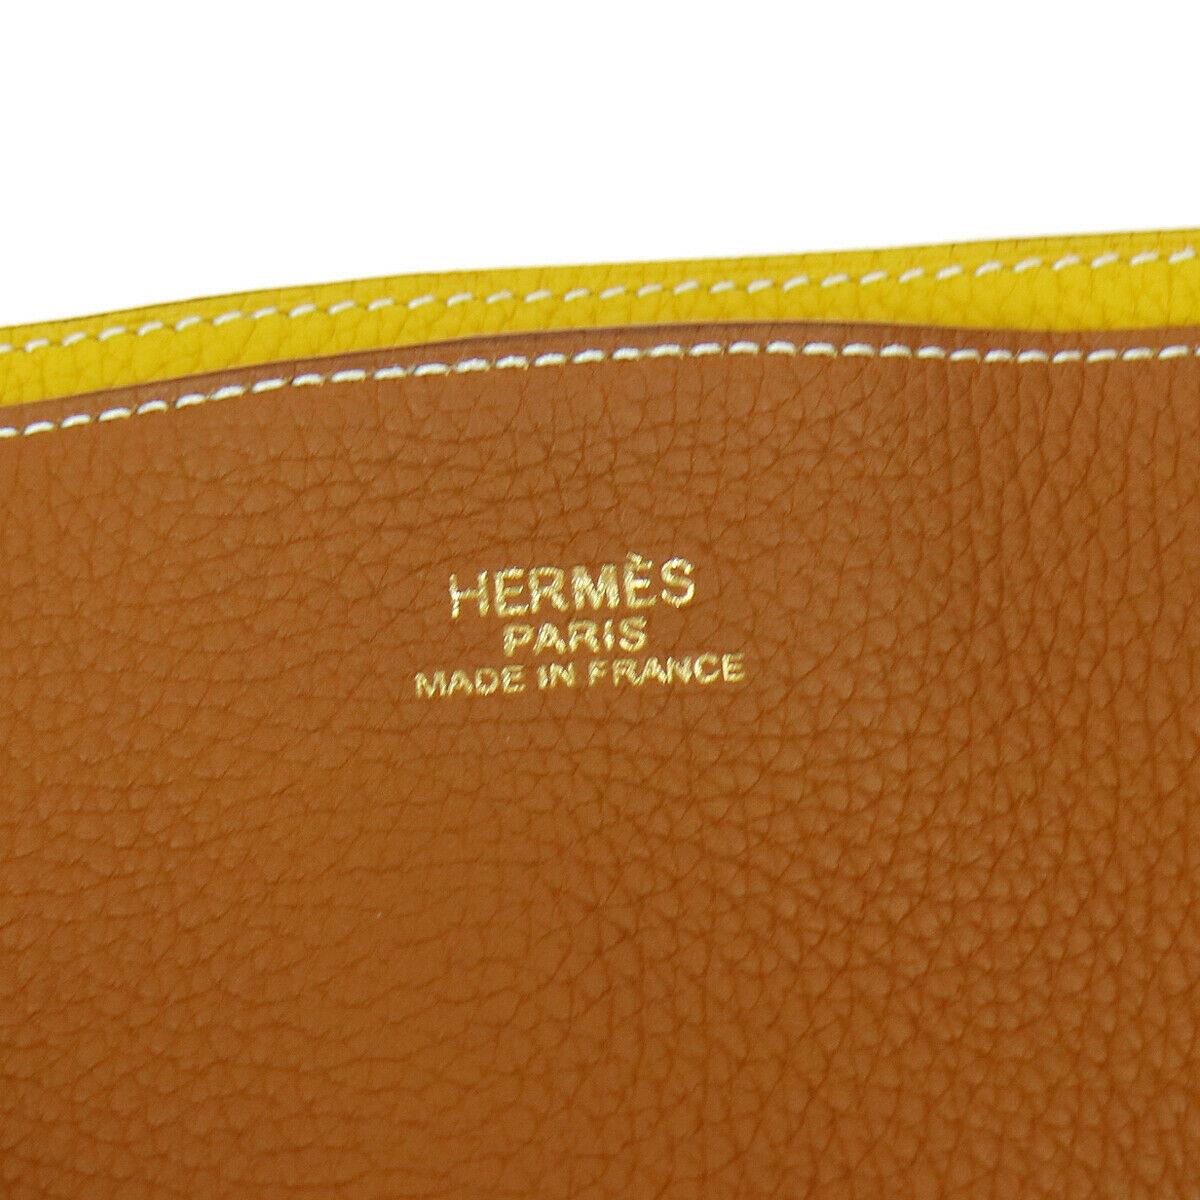  Hermes Cognac Yellow Leather Reversible Carryall Travel Men's Women's Tote Bag 3